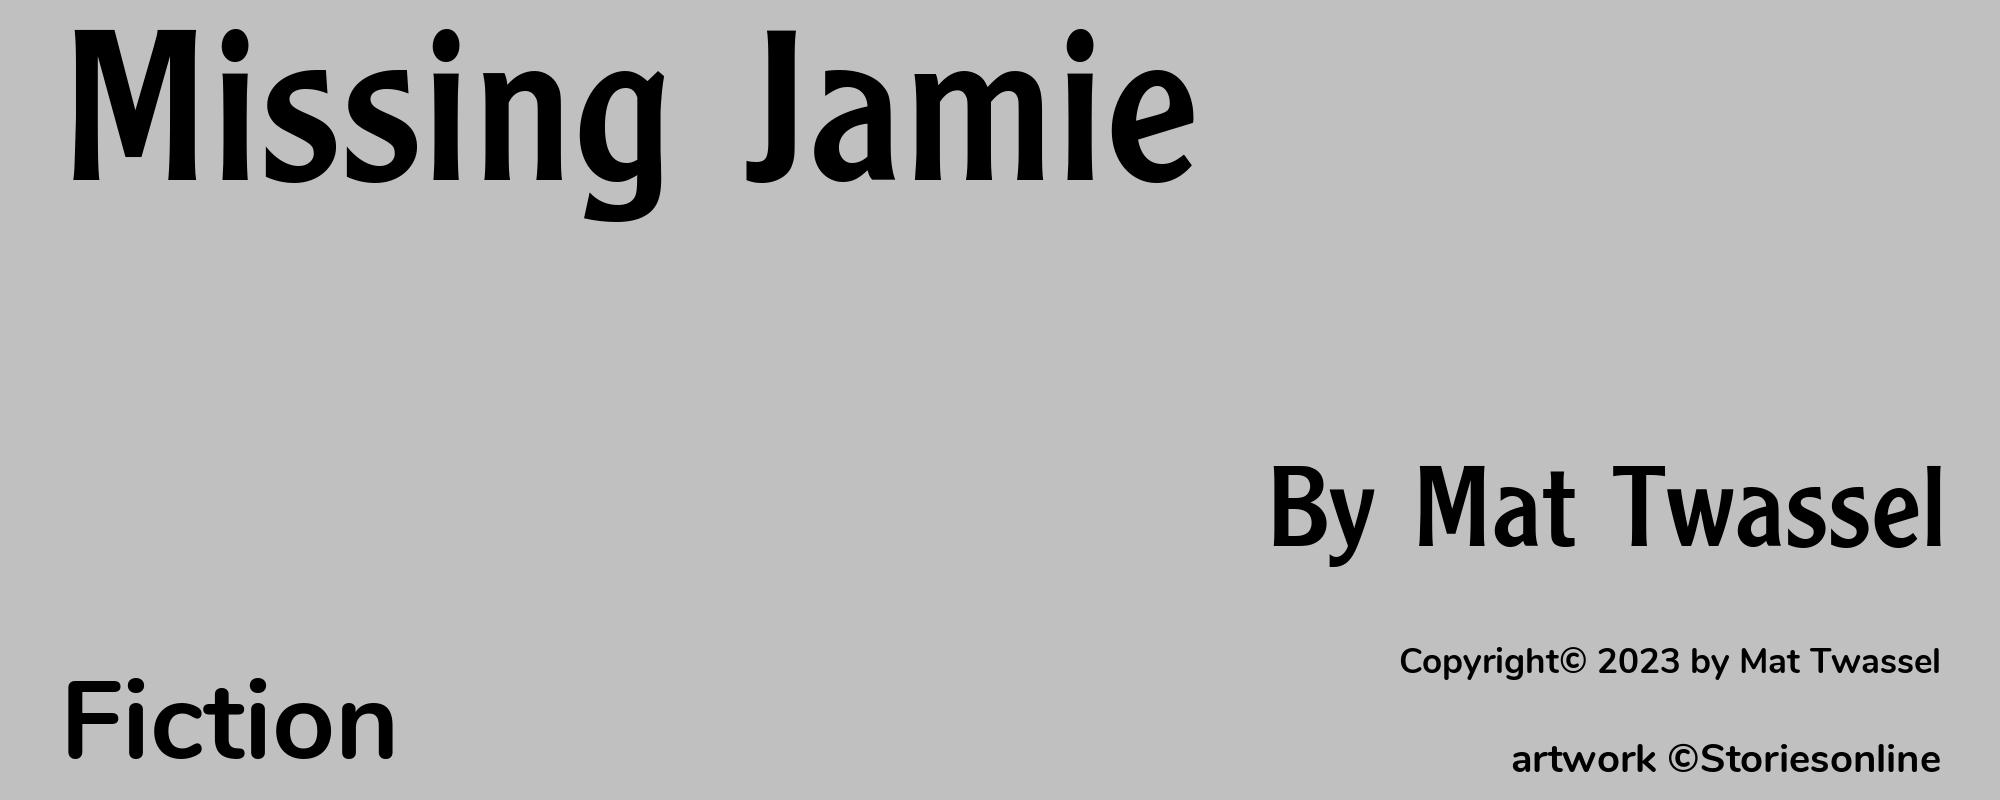 Missing Jamie - Cover